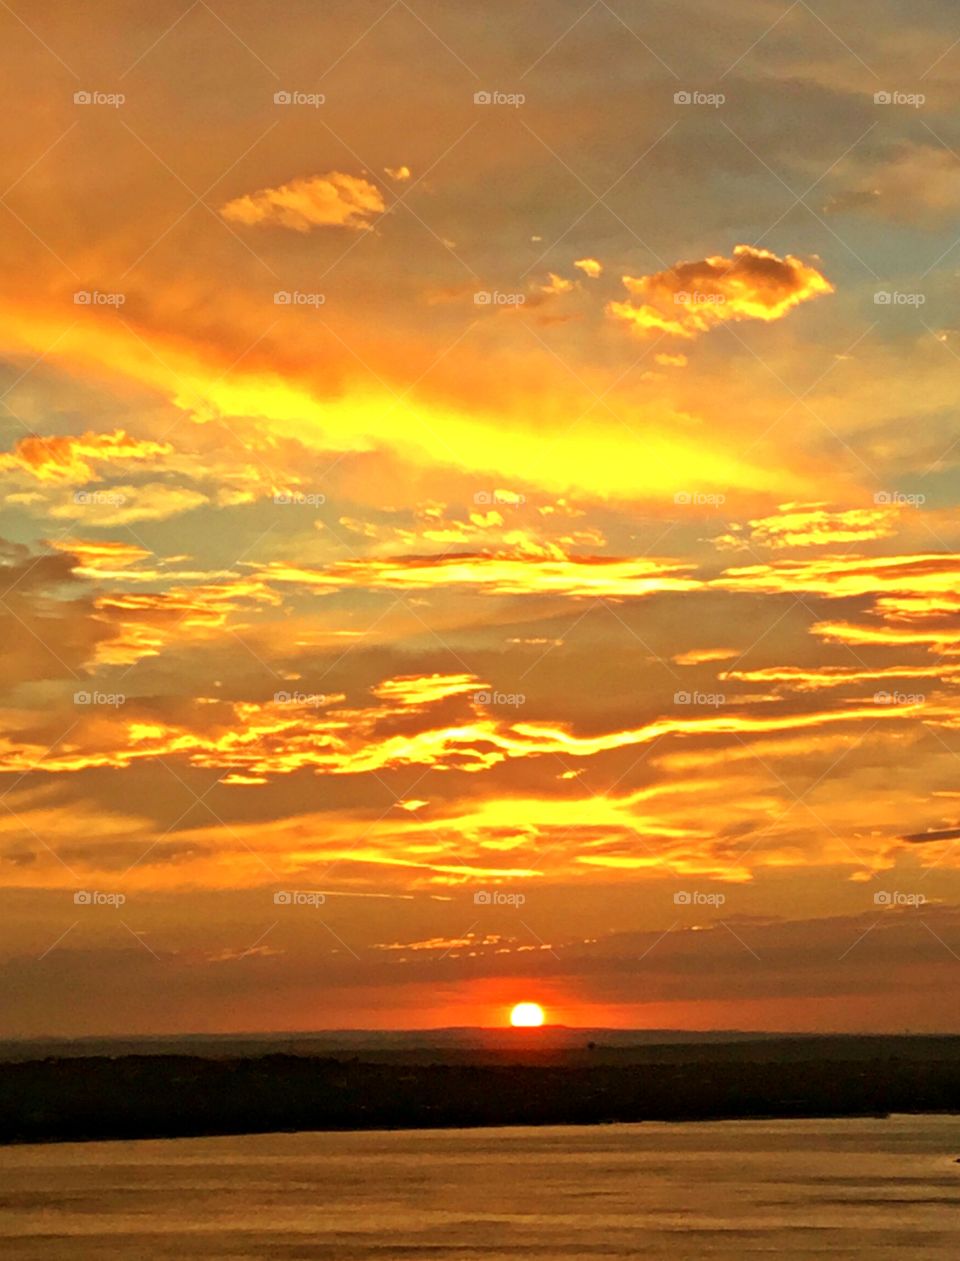 Golden Sunset - A visual orange sun descending below the horizon leaving behind a sparkling gold colored sky